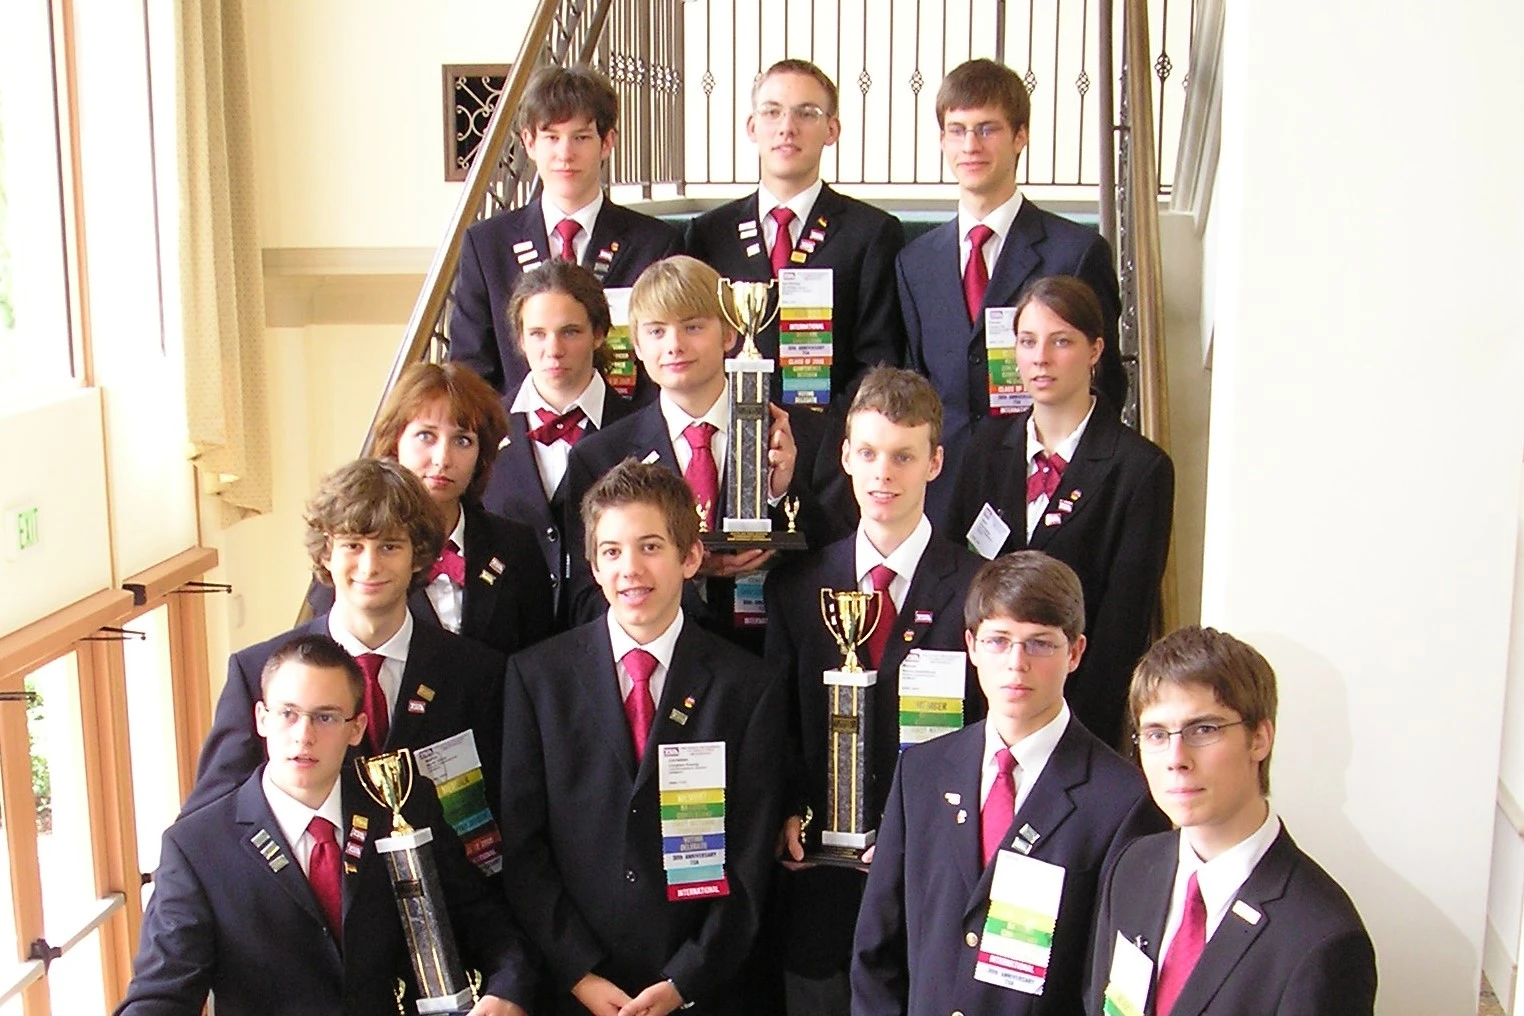 2008 Team Photo